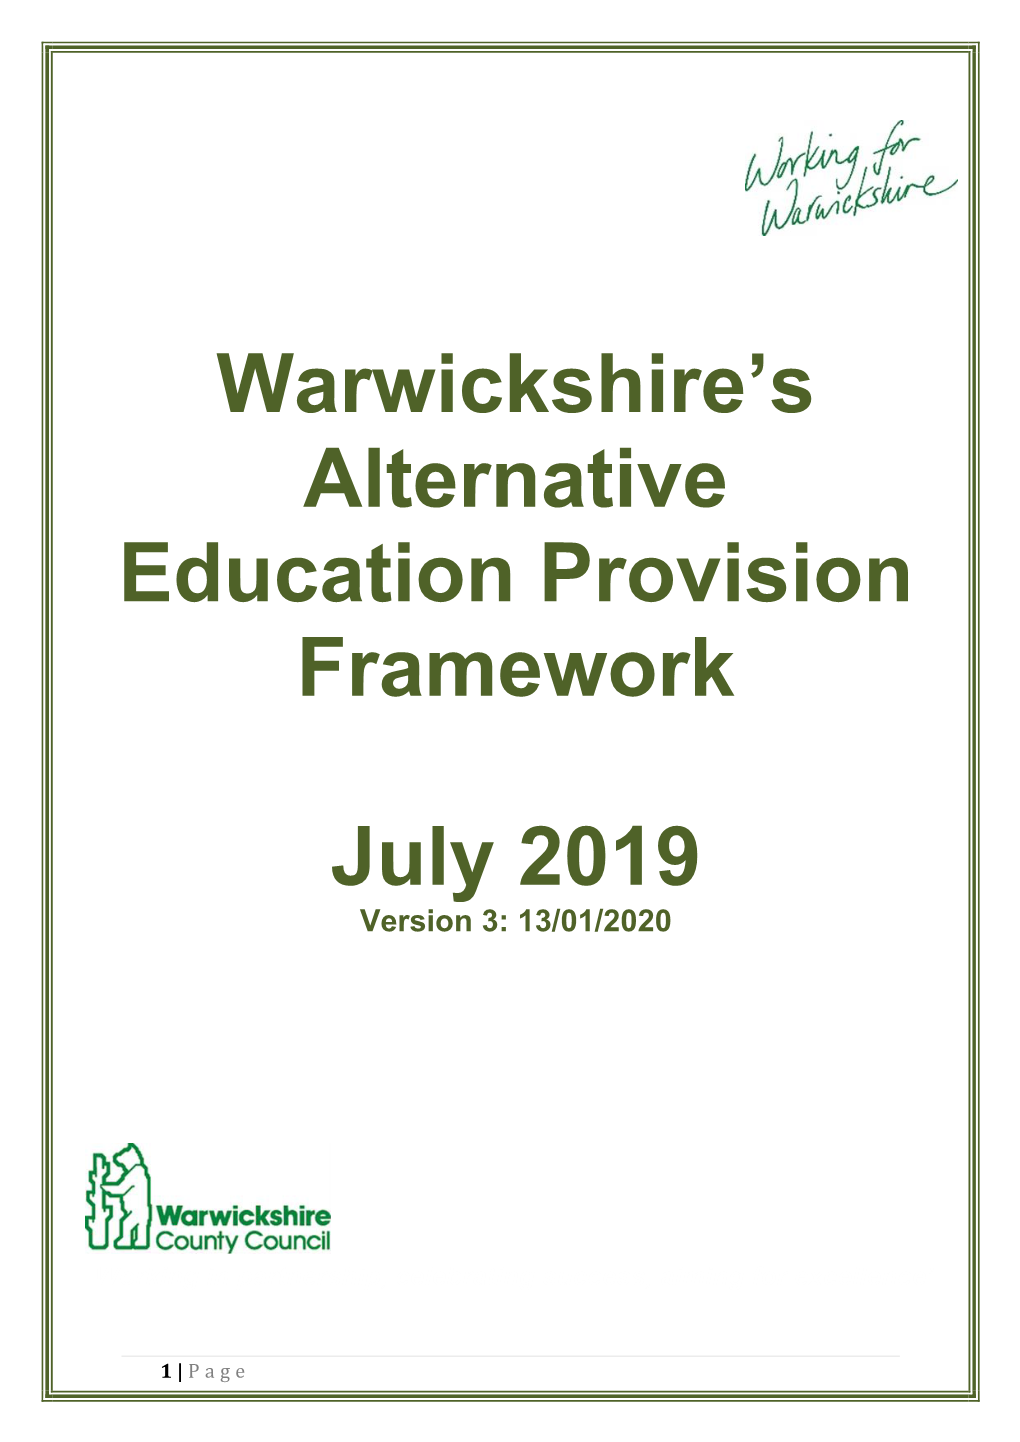 Warwickshire's Alternative Education Provision Framework July 2019